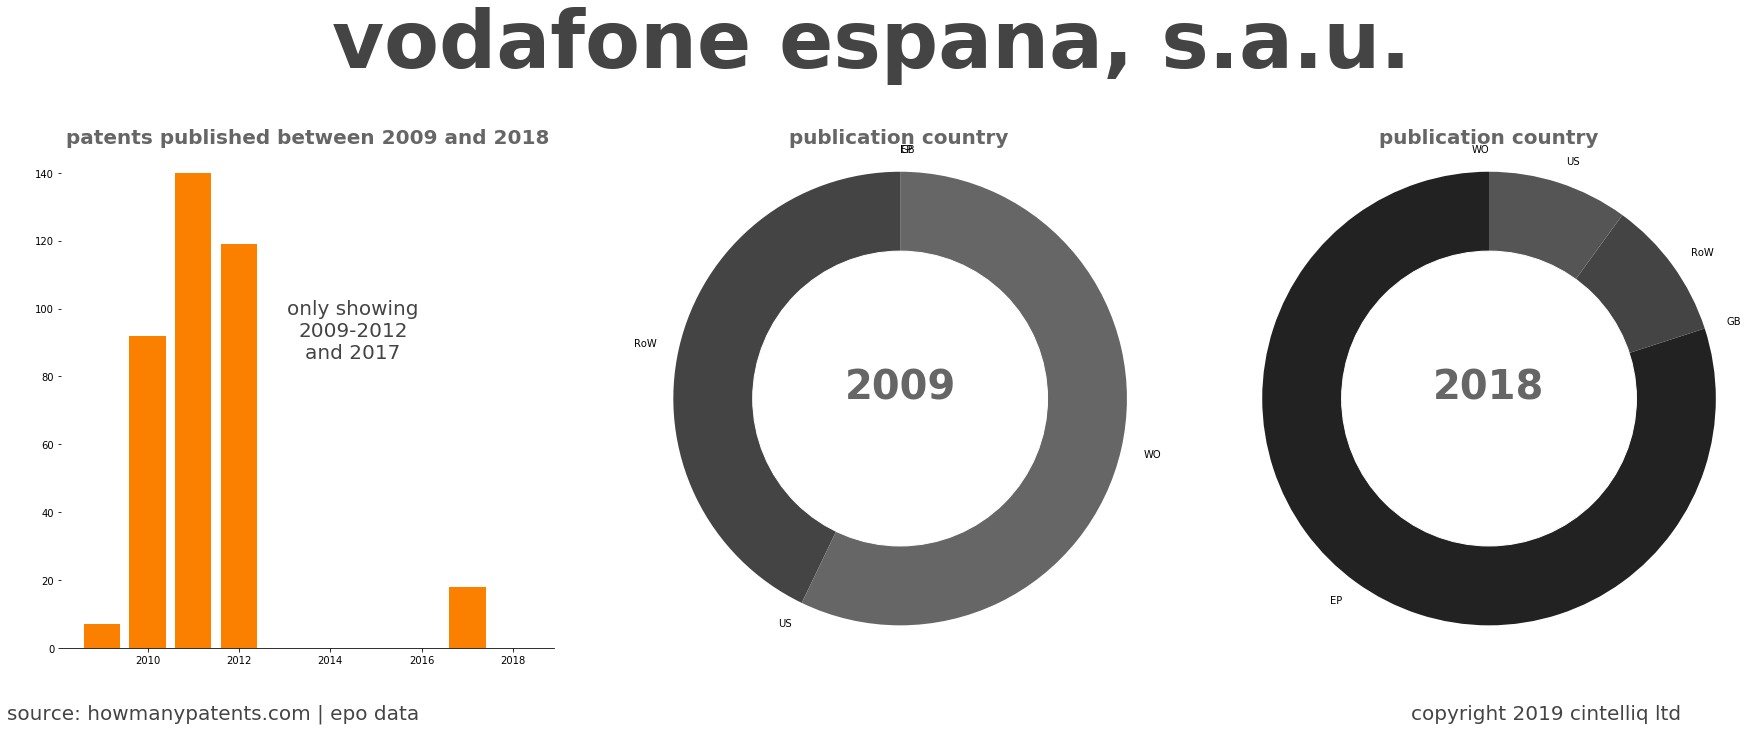 summary of patents for Vodafone Espana, S.A.U.